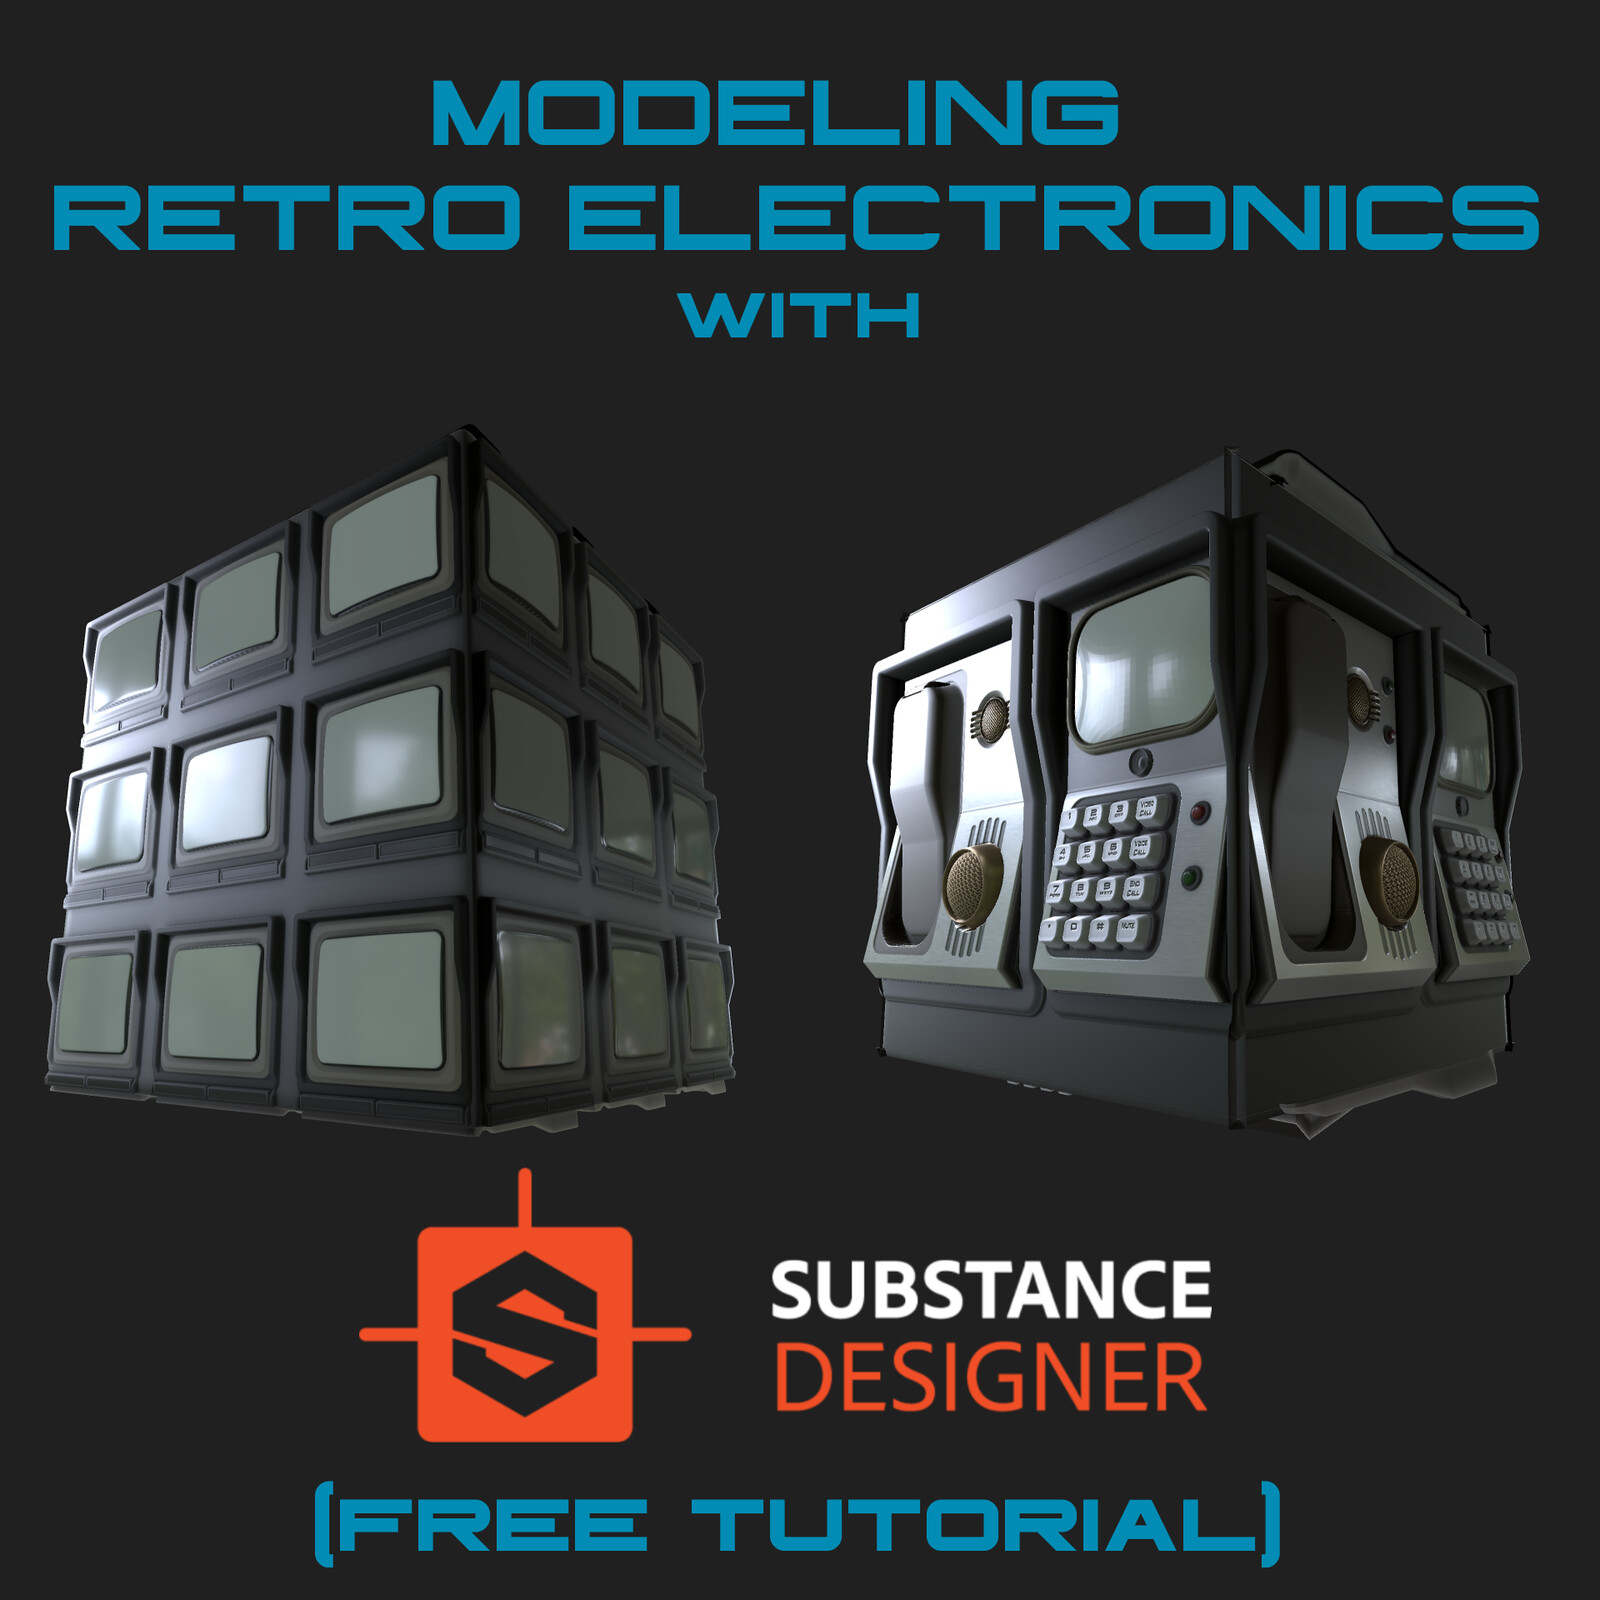 Substance Designer Tutorial - Modeling Retro Electronics